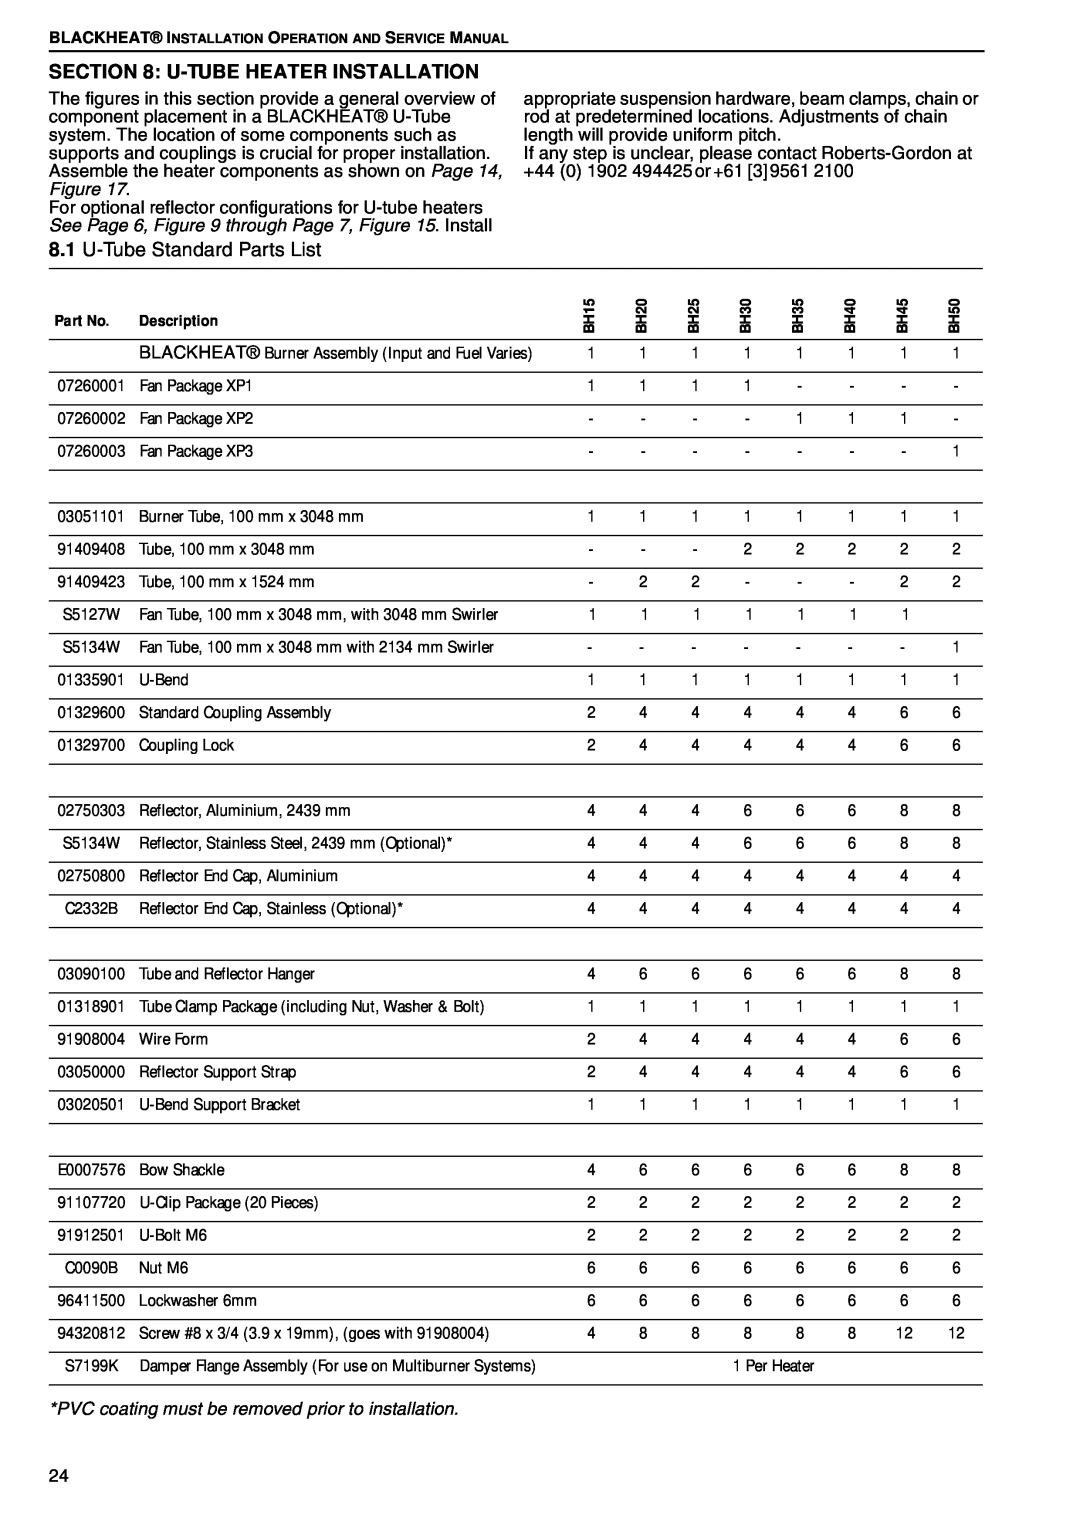 Roberts Gorden BH15 service manual 8.1U-TubeStandard Parts List, U-Tubeheater Installation 